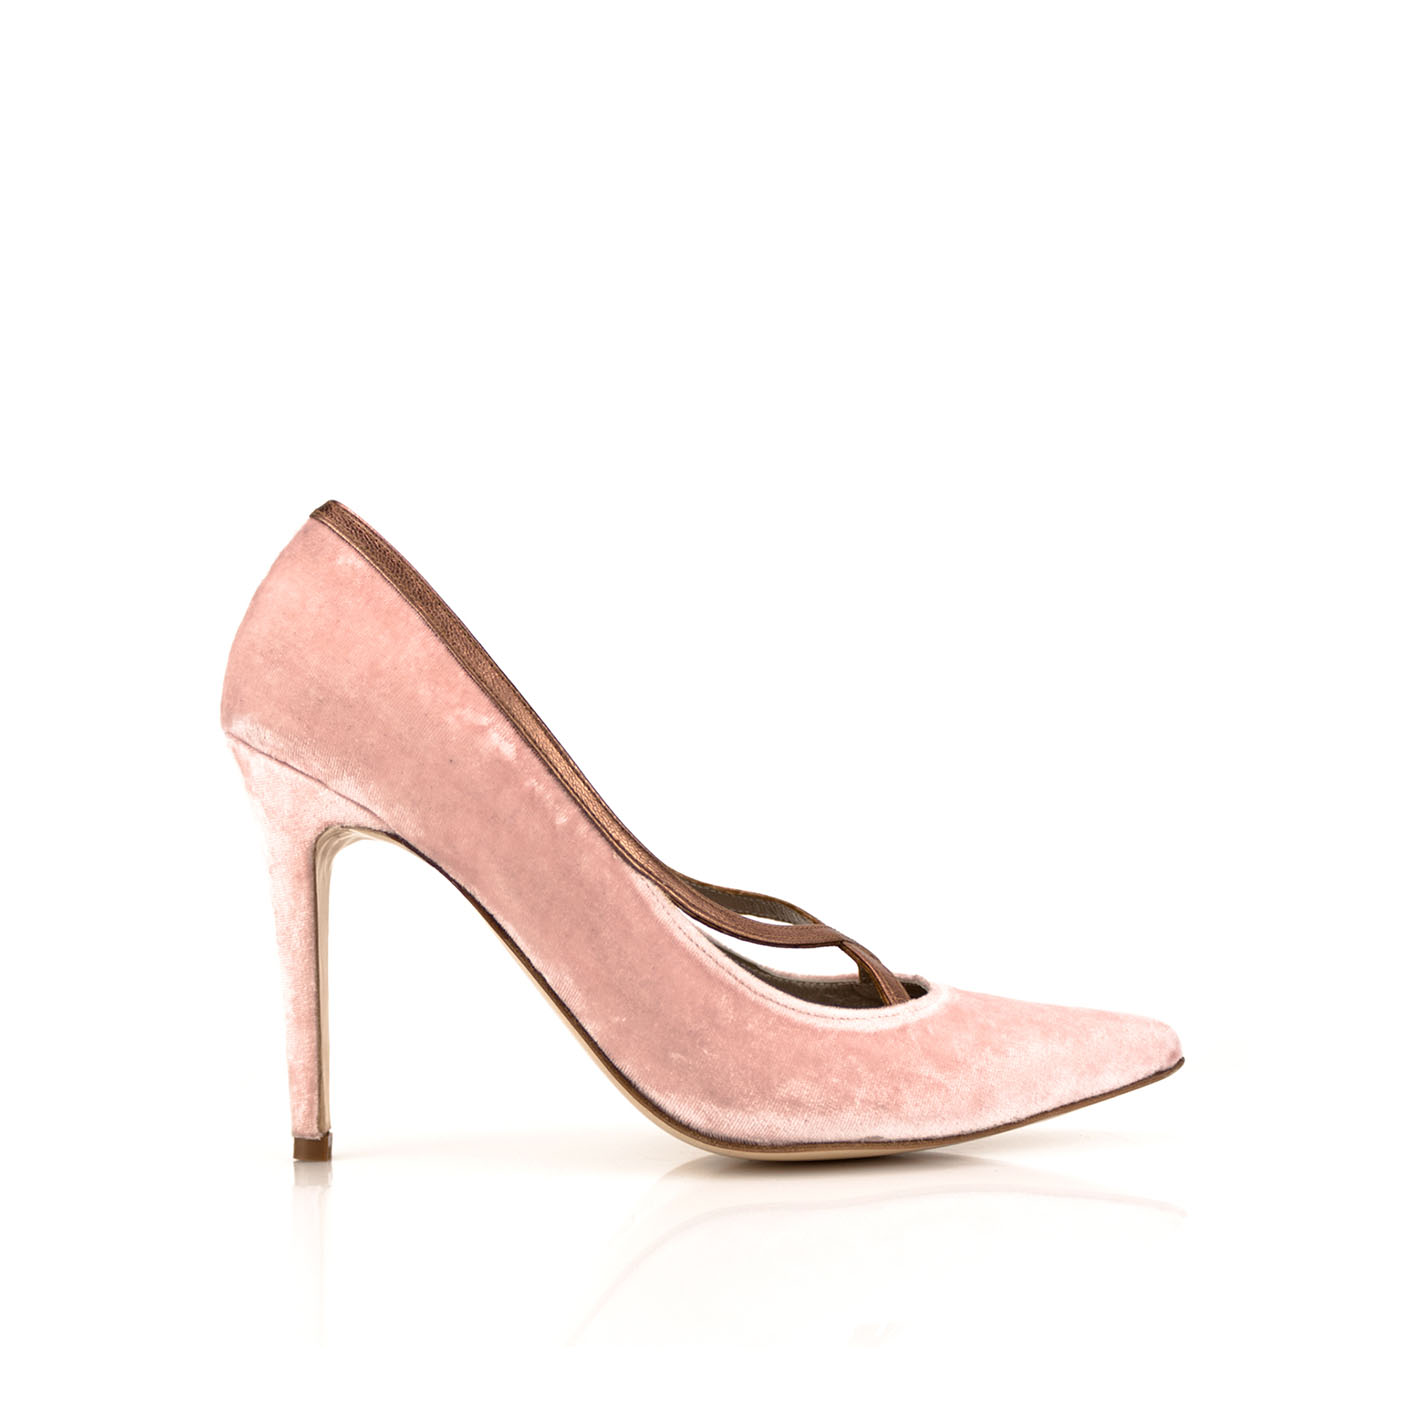 Centímetro Me preparé Besugo zapatos salon stiletto mujer en terciopelo rosa con tacon de 10 cm